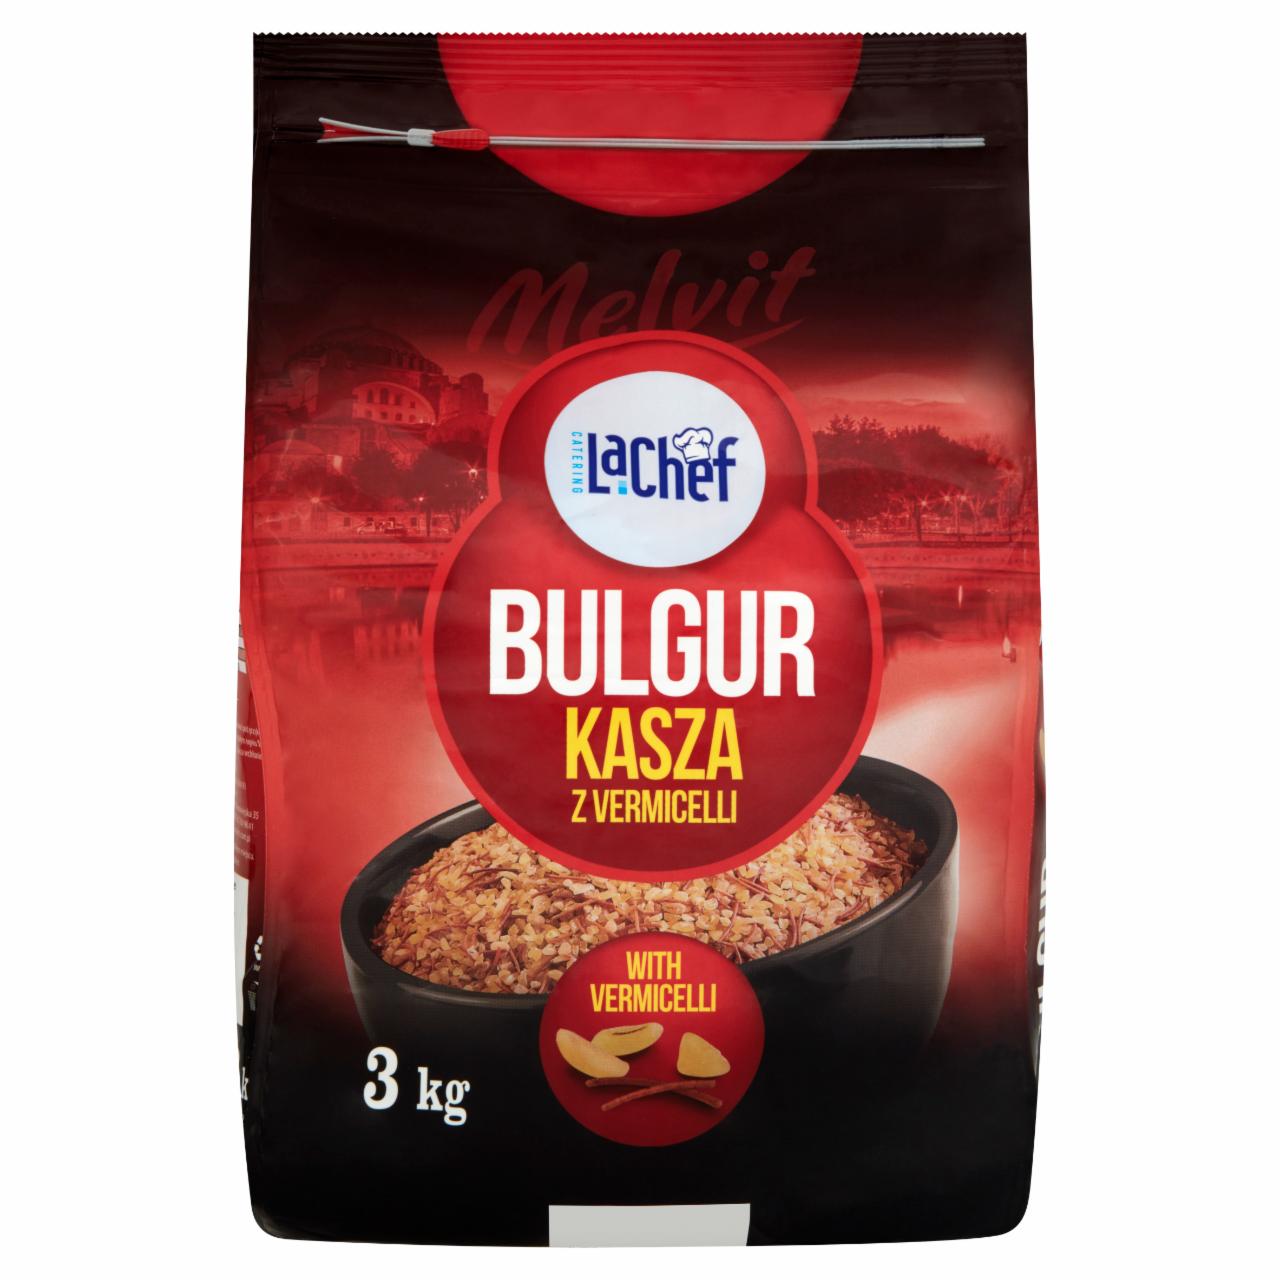 Zdjęcia - Melvit La Chef Kasza bulgur z vermicelli 3 kg